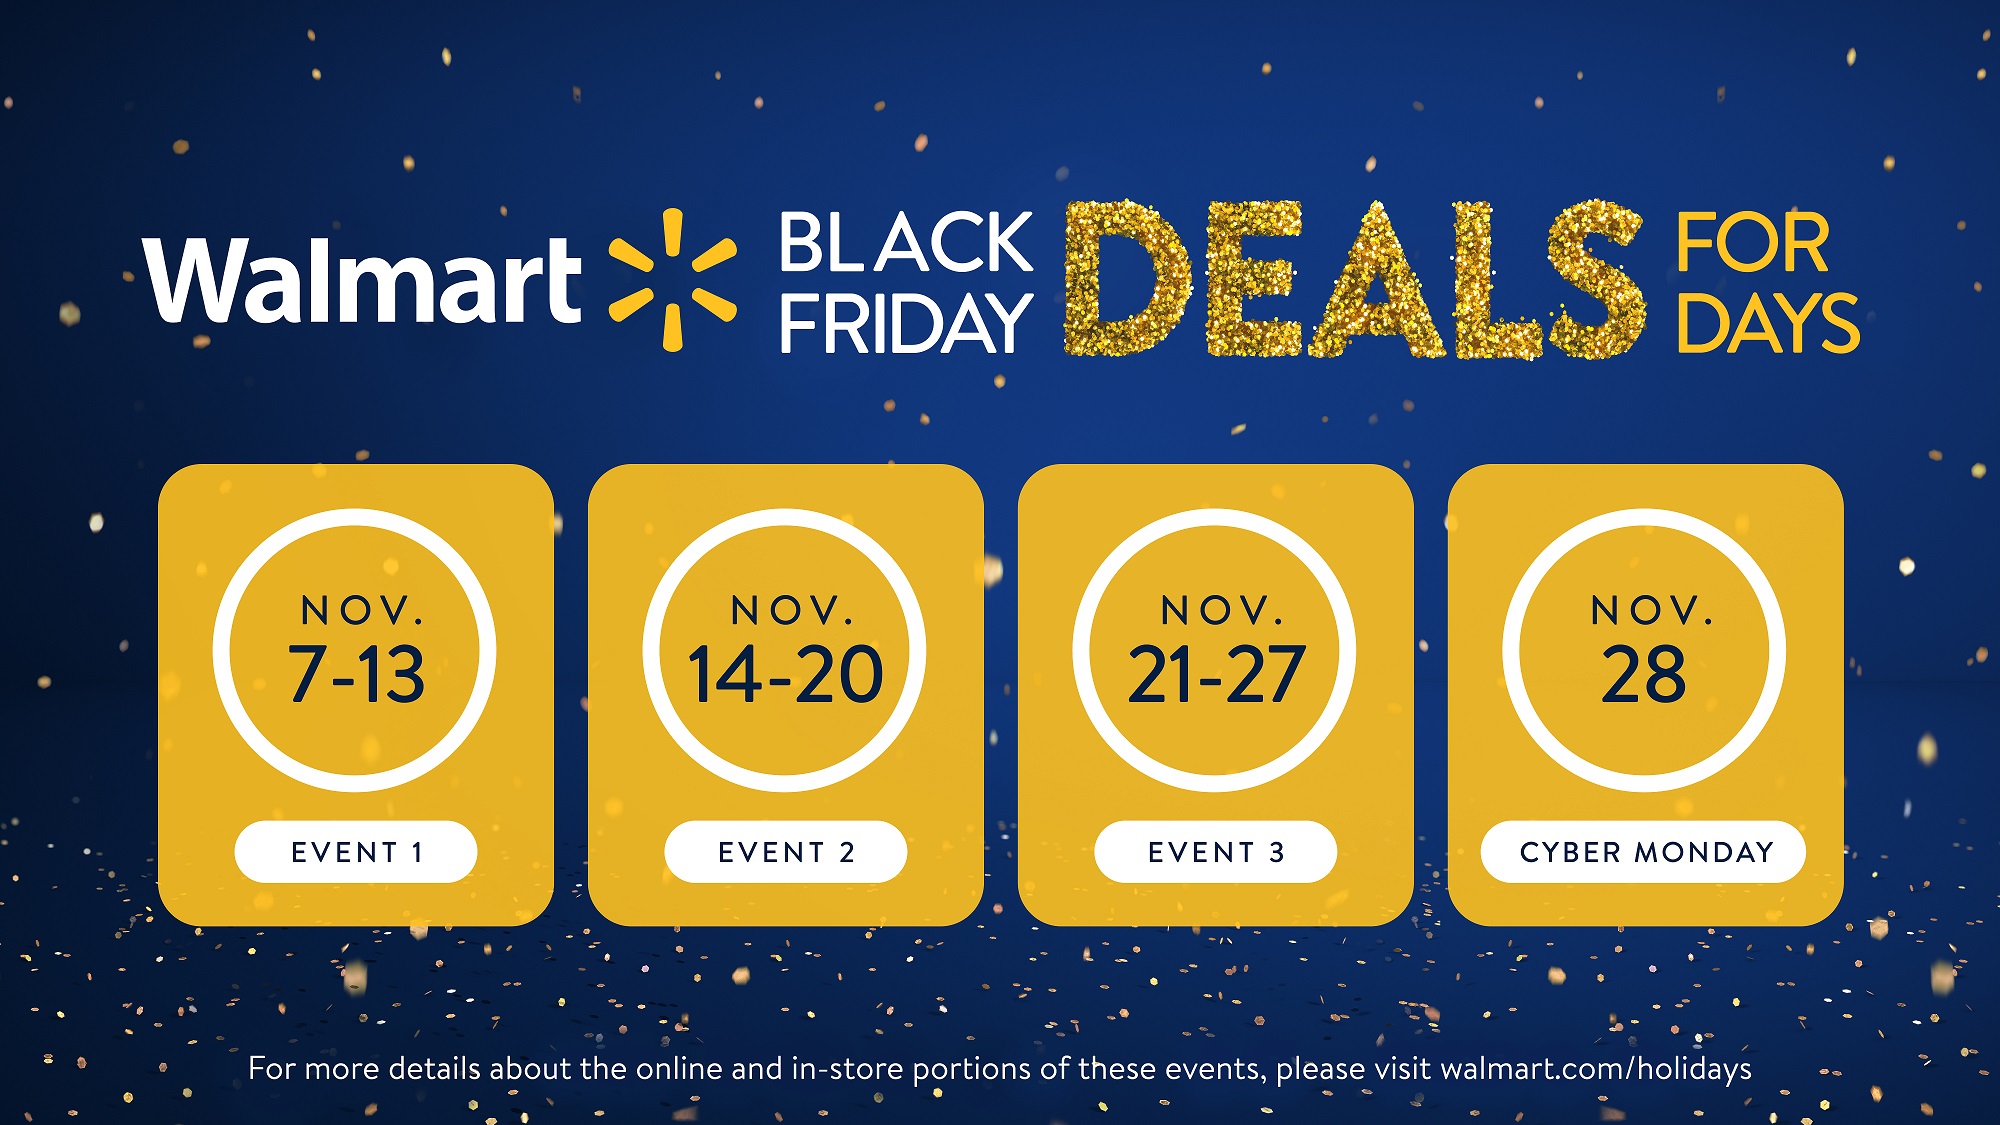 Walmart Black Friday Deals Information